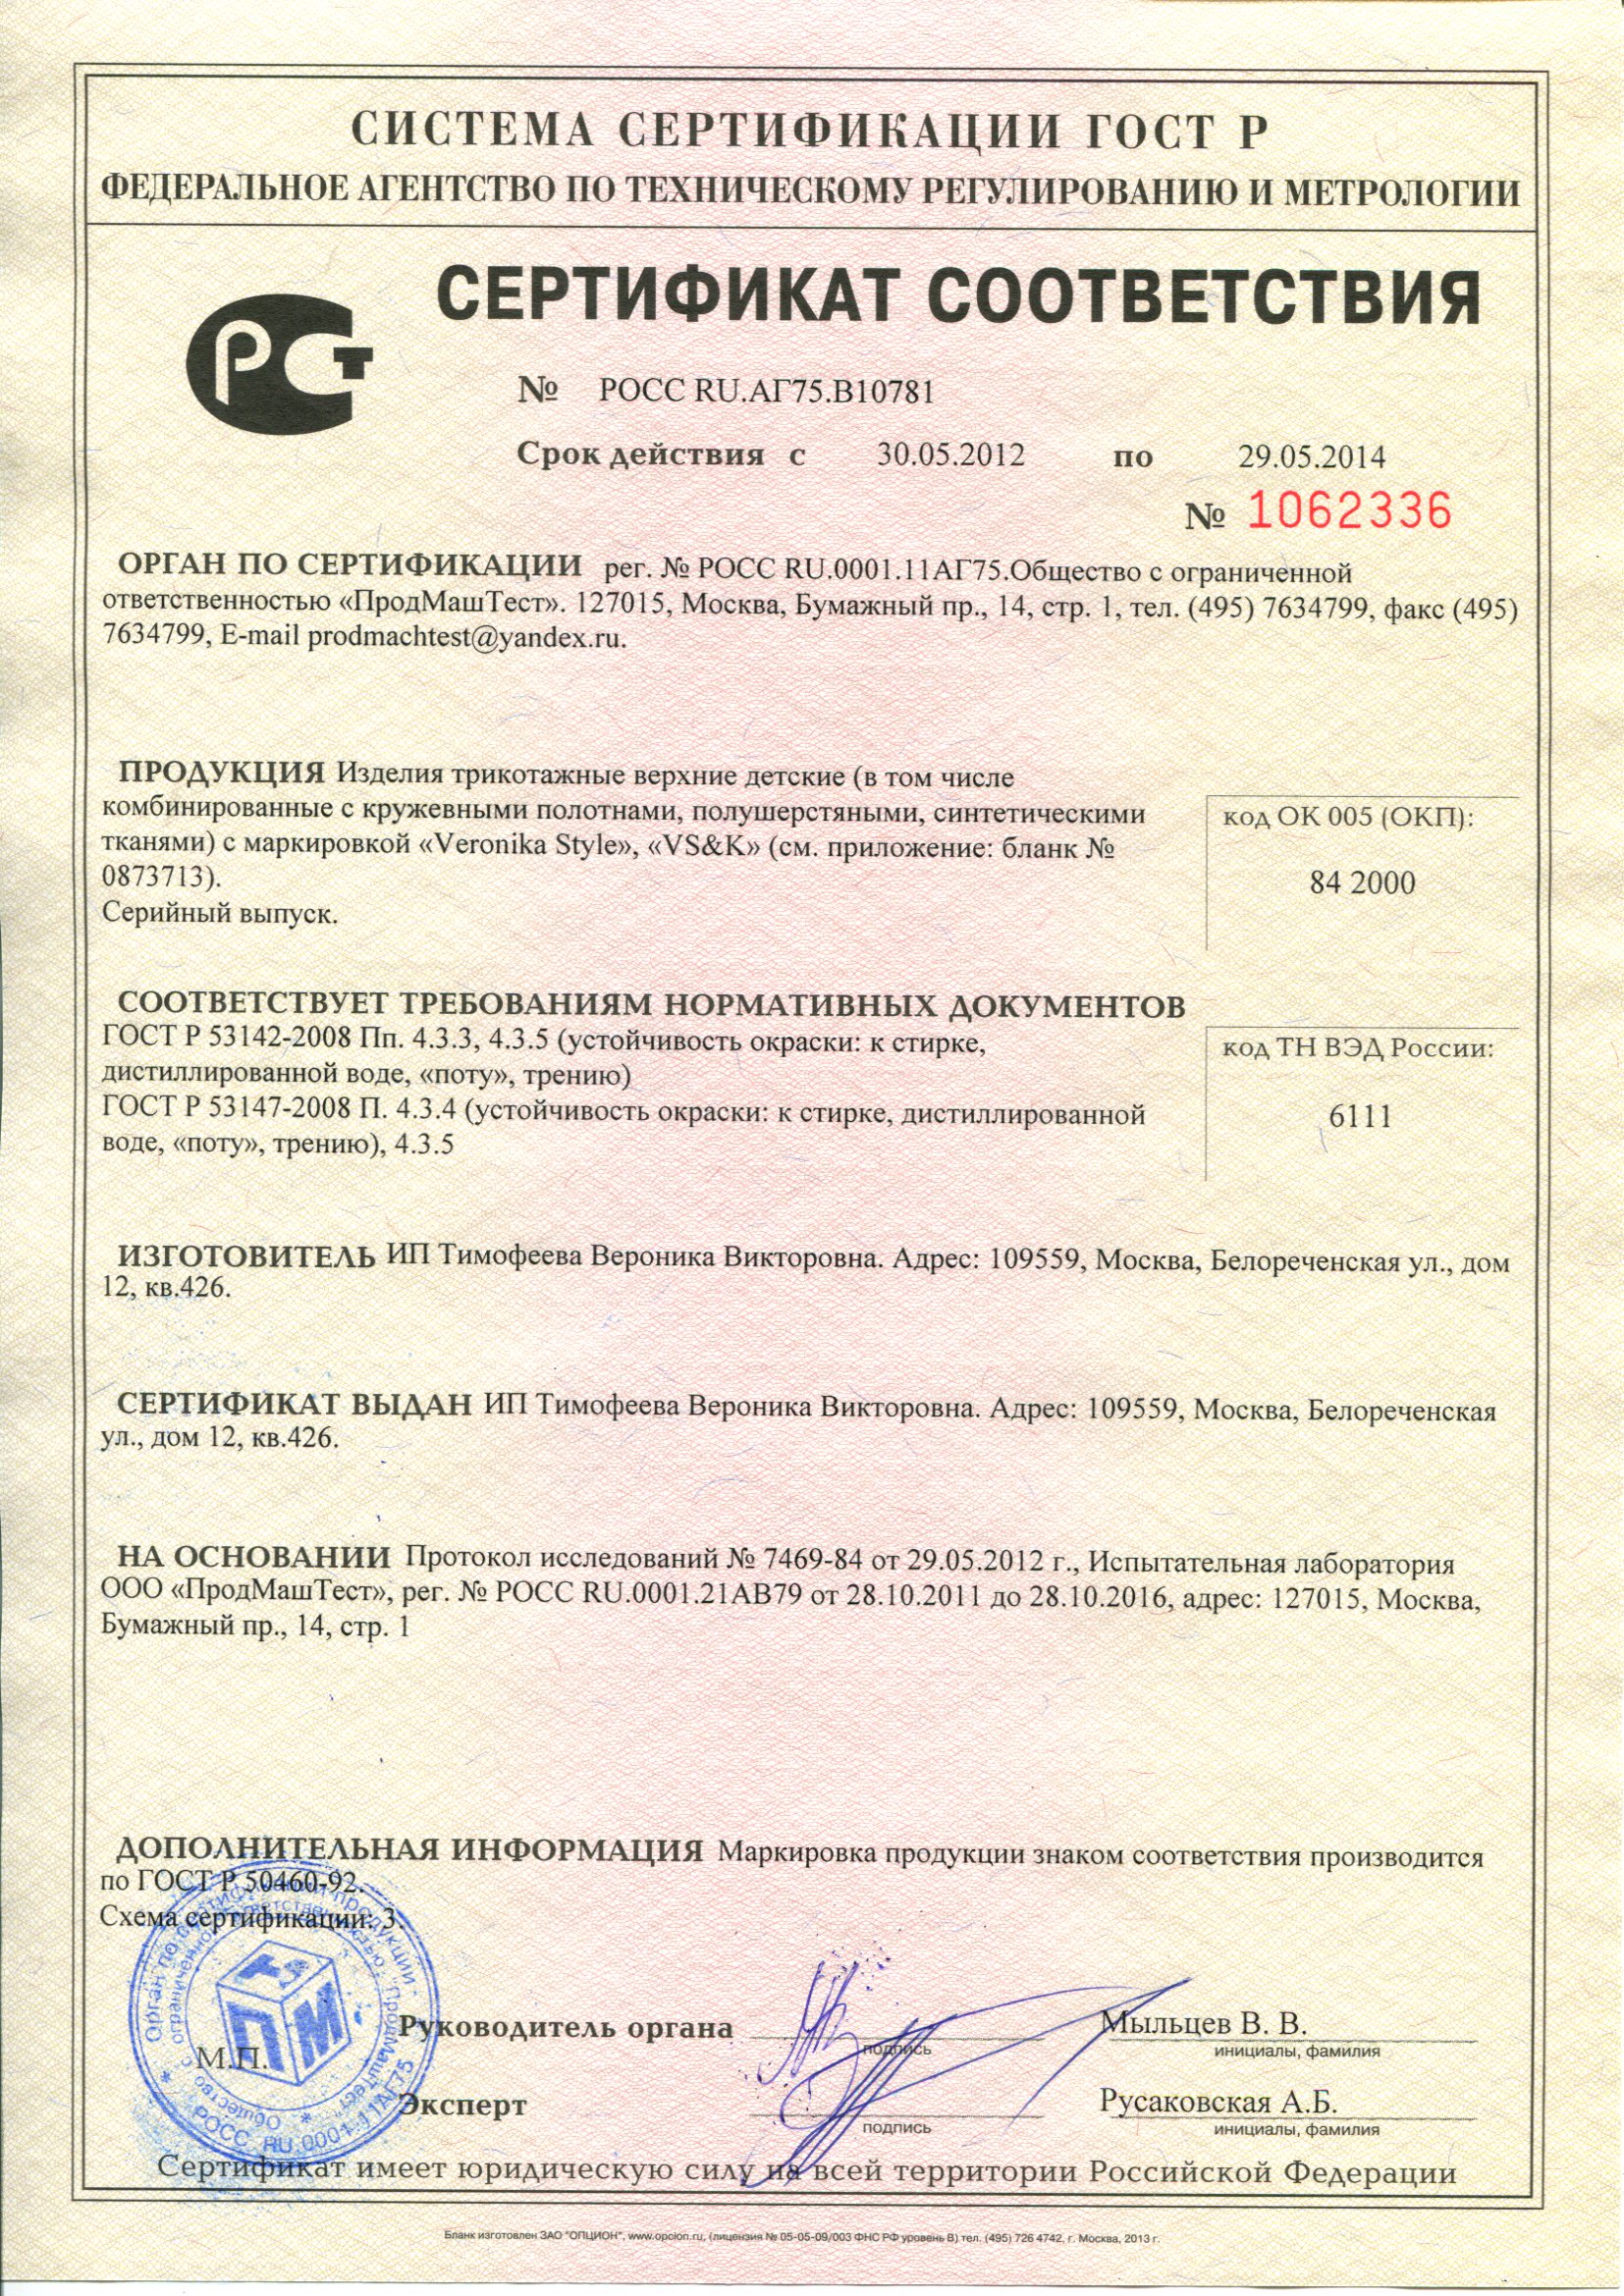 Пример Сертификата соответствия ГОСТ Р 